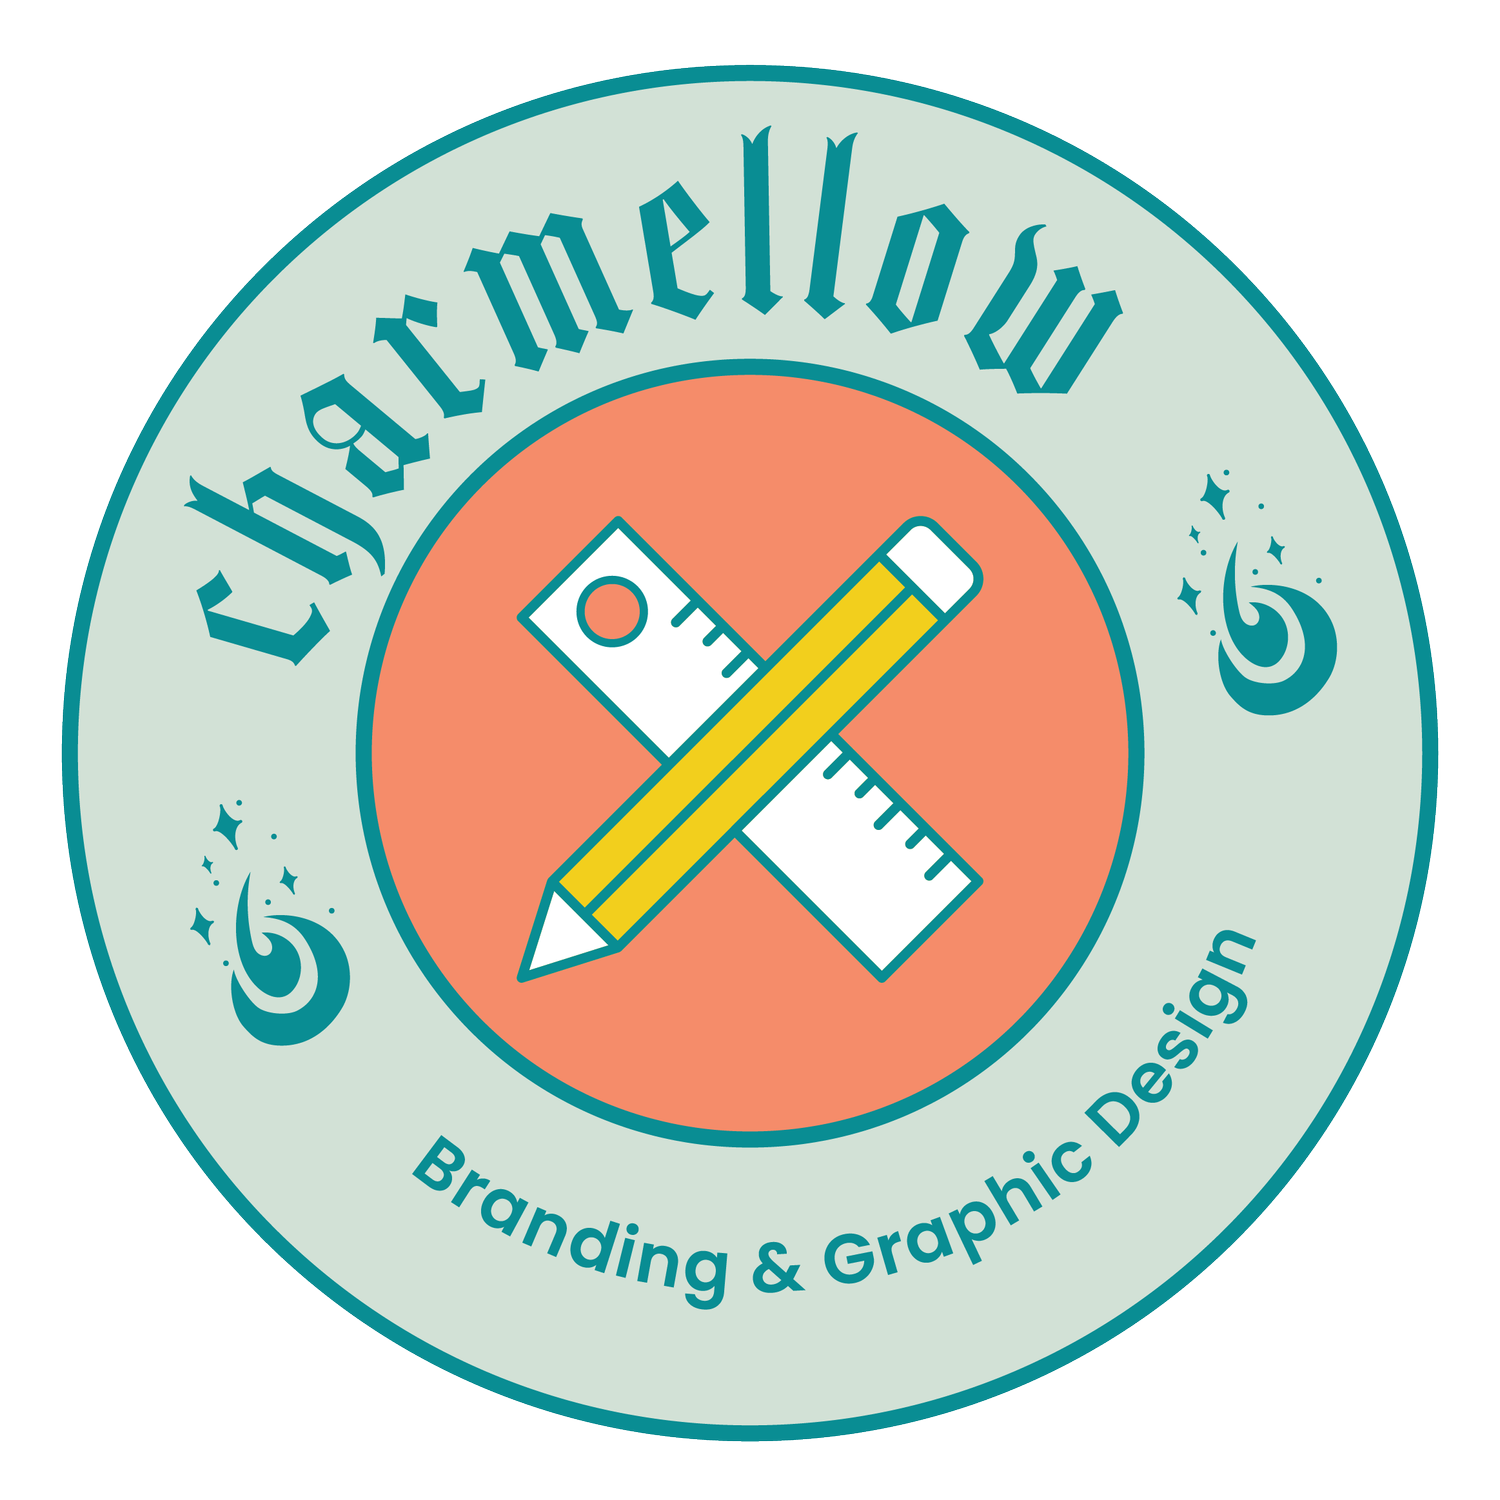 charmellow: branding & graphic design